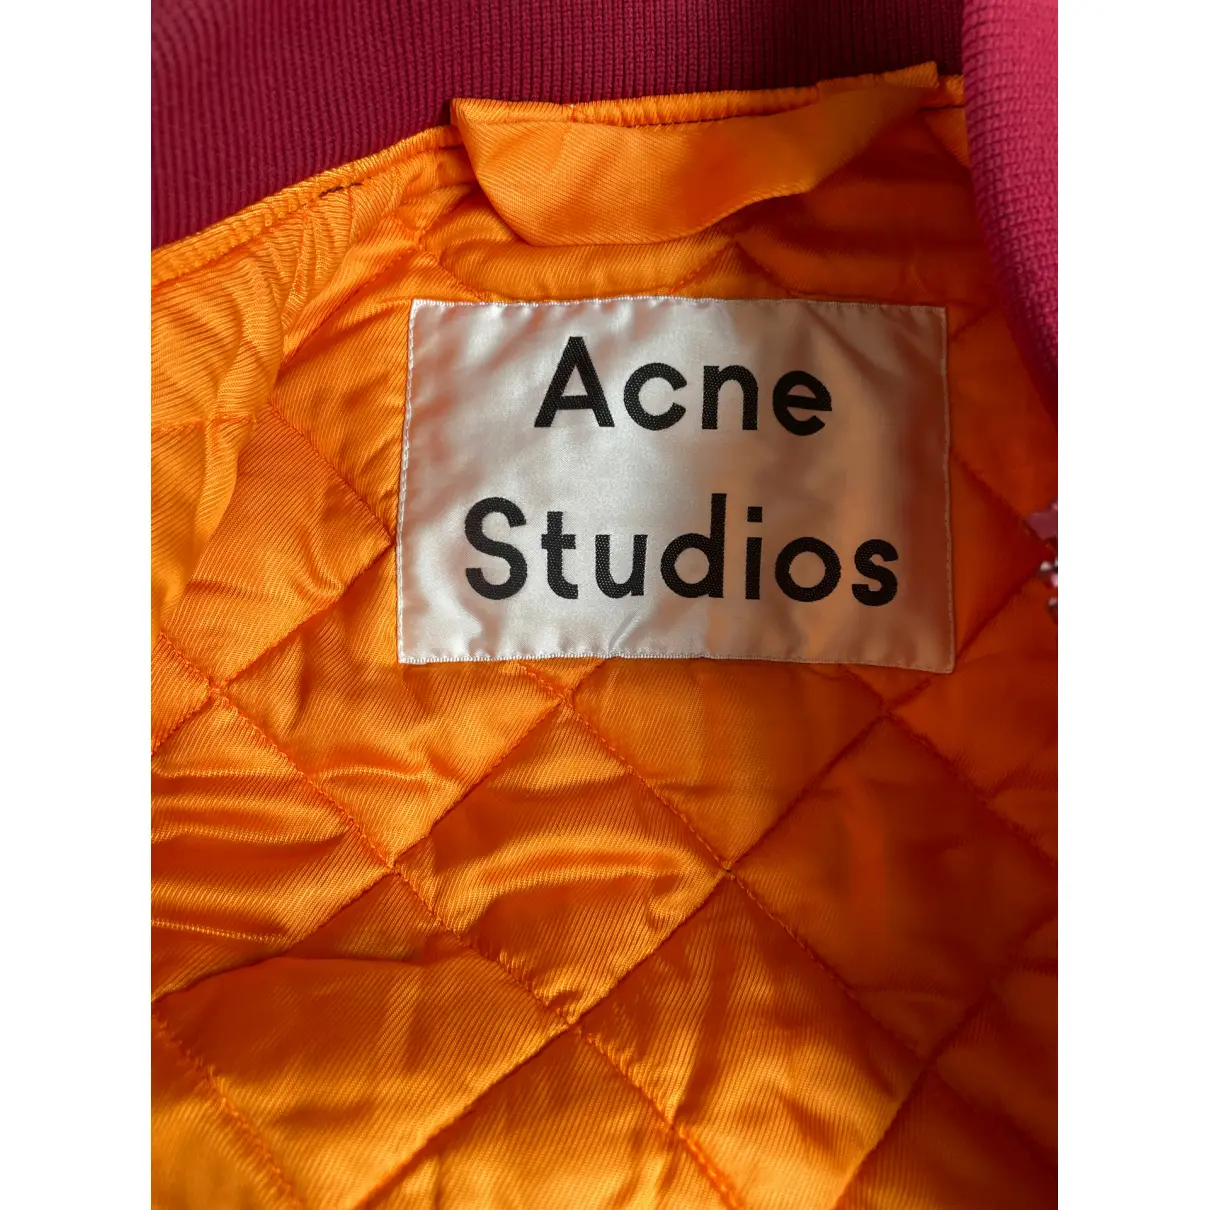 Buy Acne Studios Jacket online